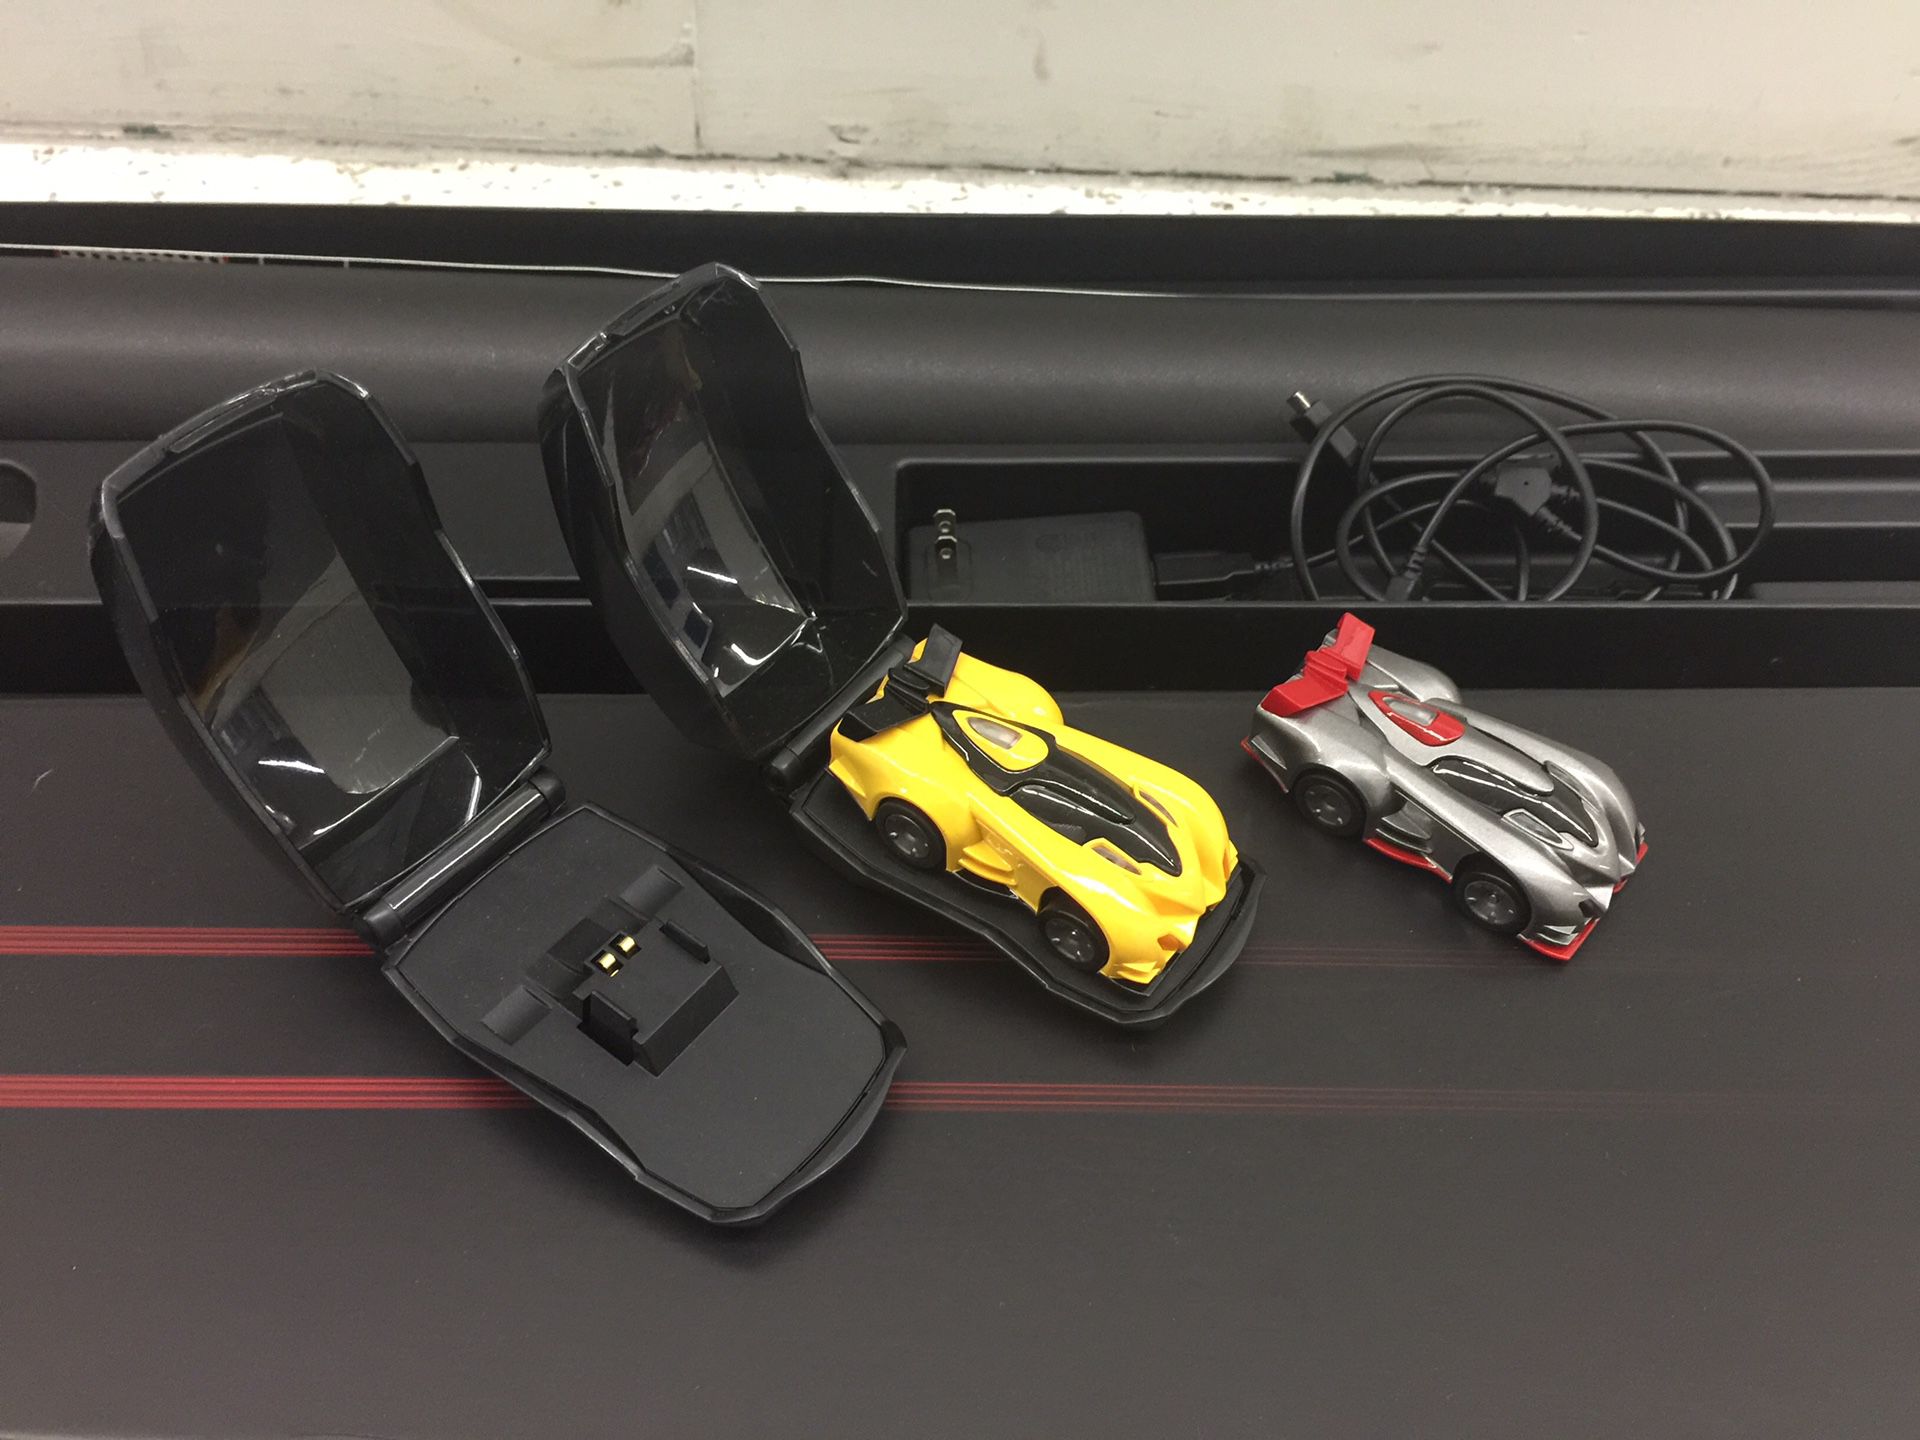 Anki Drive Race Car Set - No App